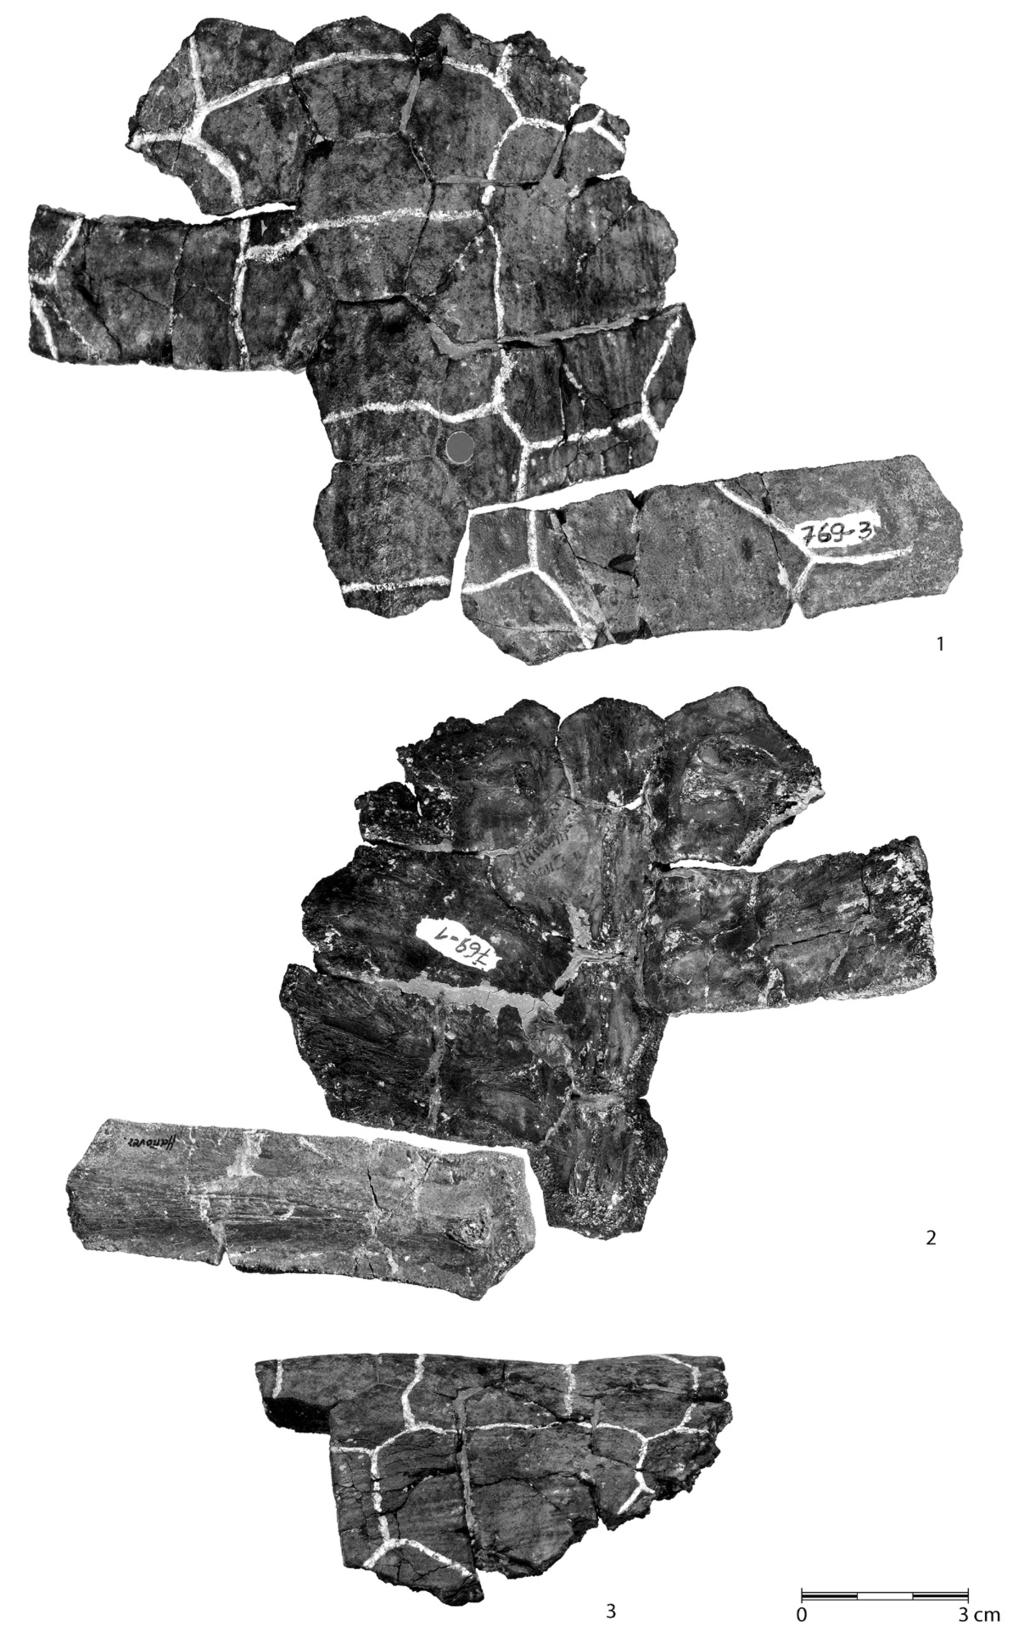 H.-V. Karl, E. Gröning & C. Brauckmann 15 Plate 1. Tropidemys seebachi Portis, 1878, lectotype, GZG.V.24968/ GZG.V.769-1: Anterior fragment of carapax with neuralia I-IV and remains of pleuralia I-III dex.